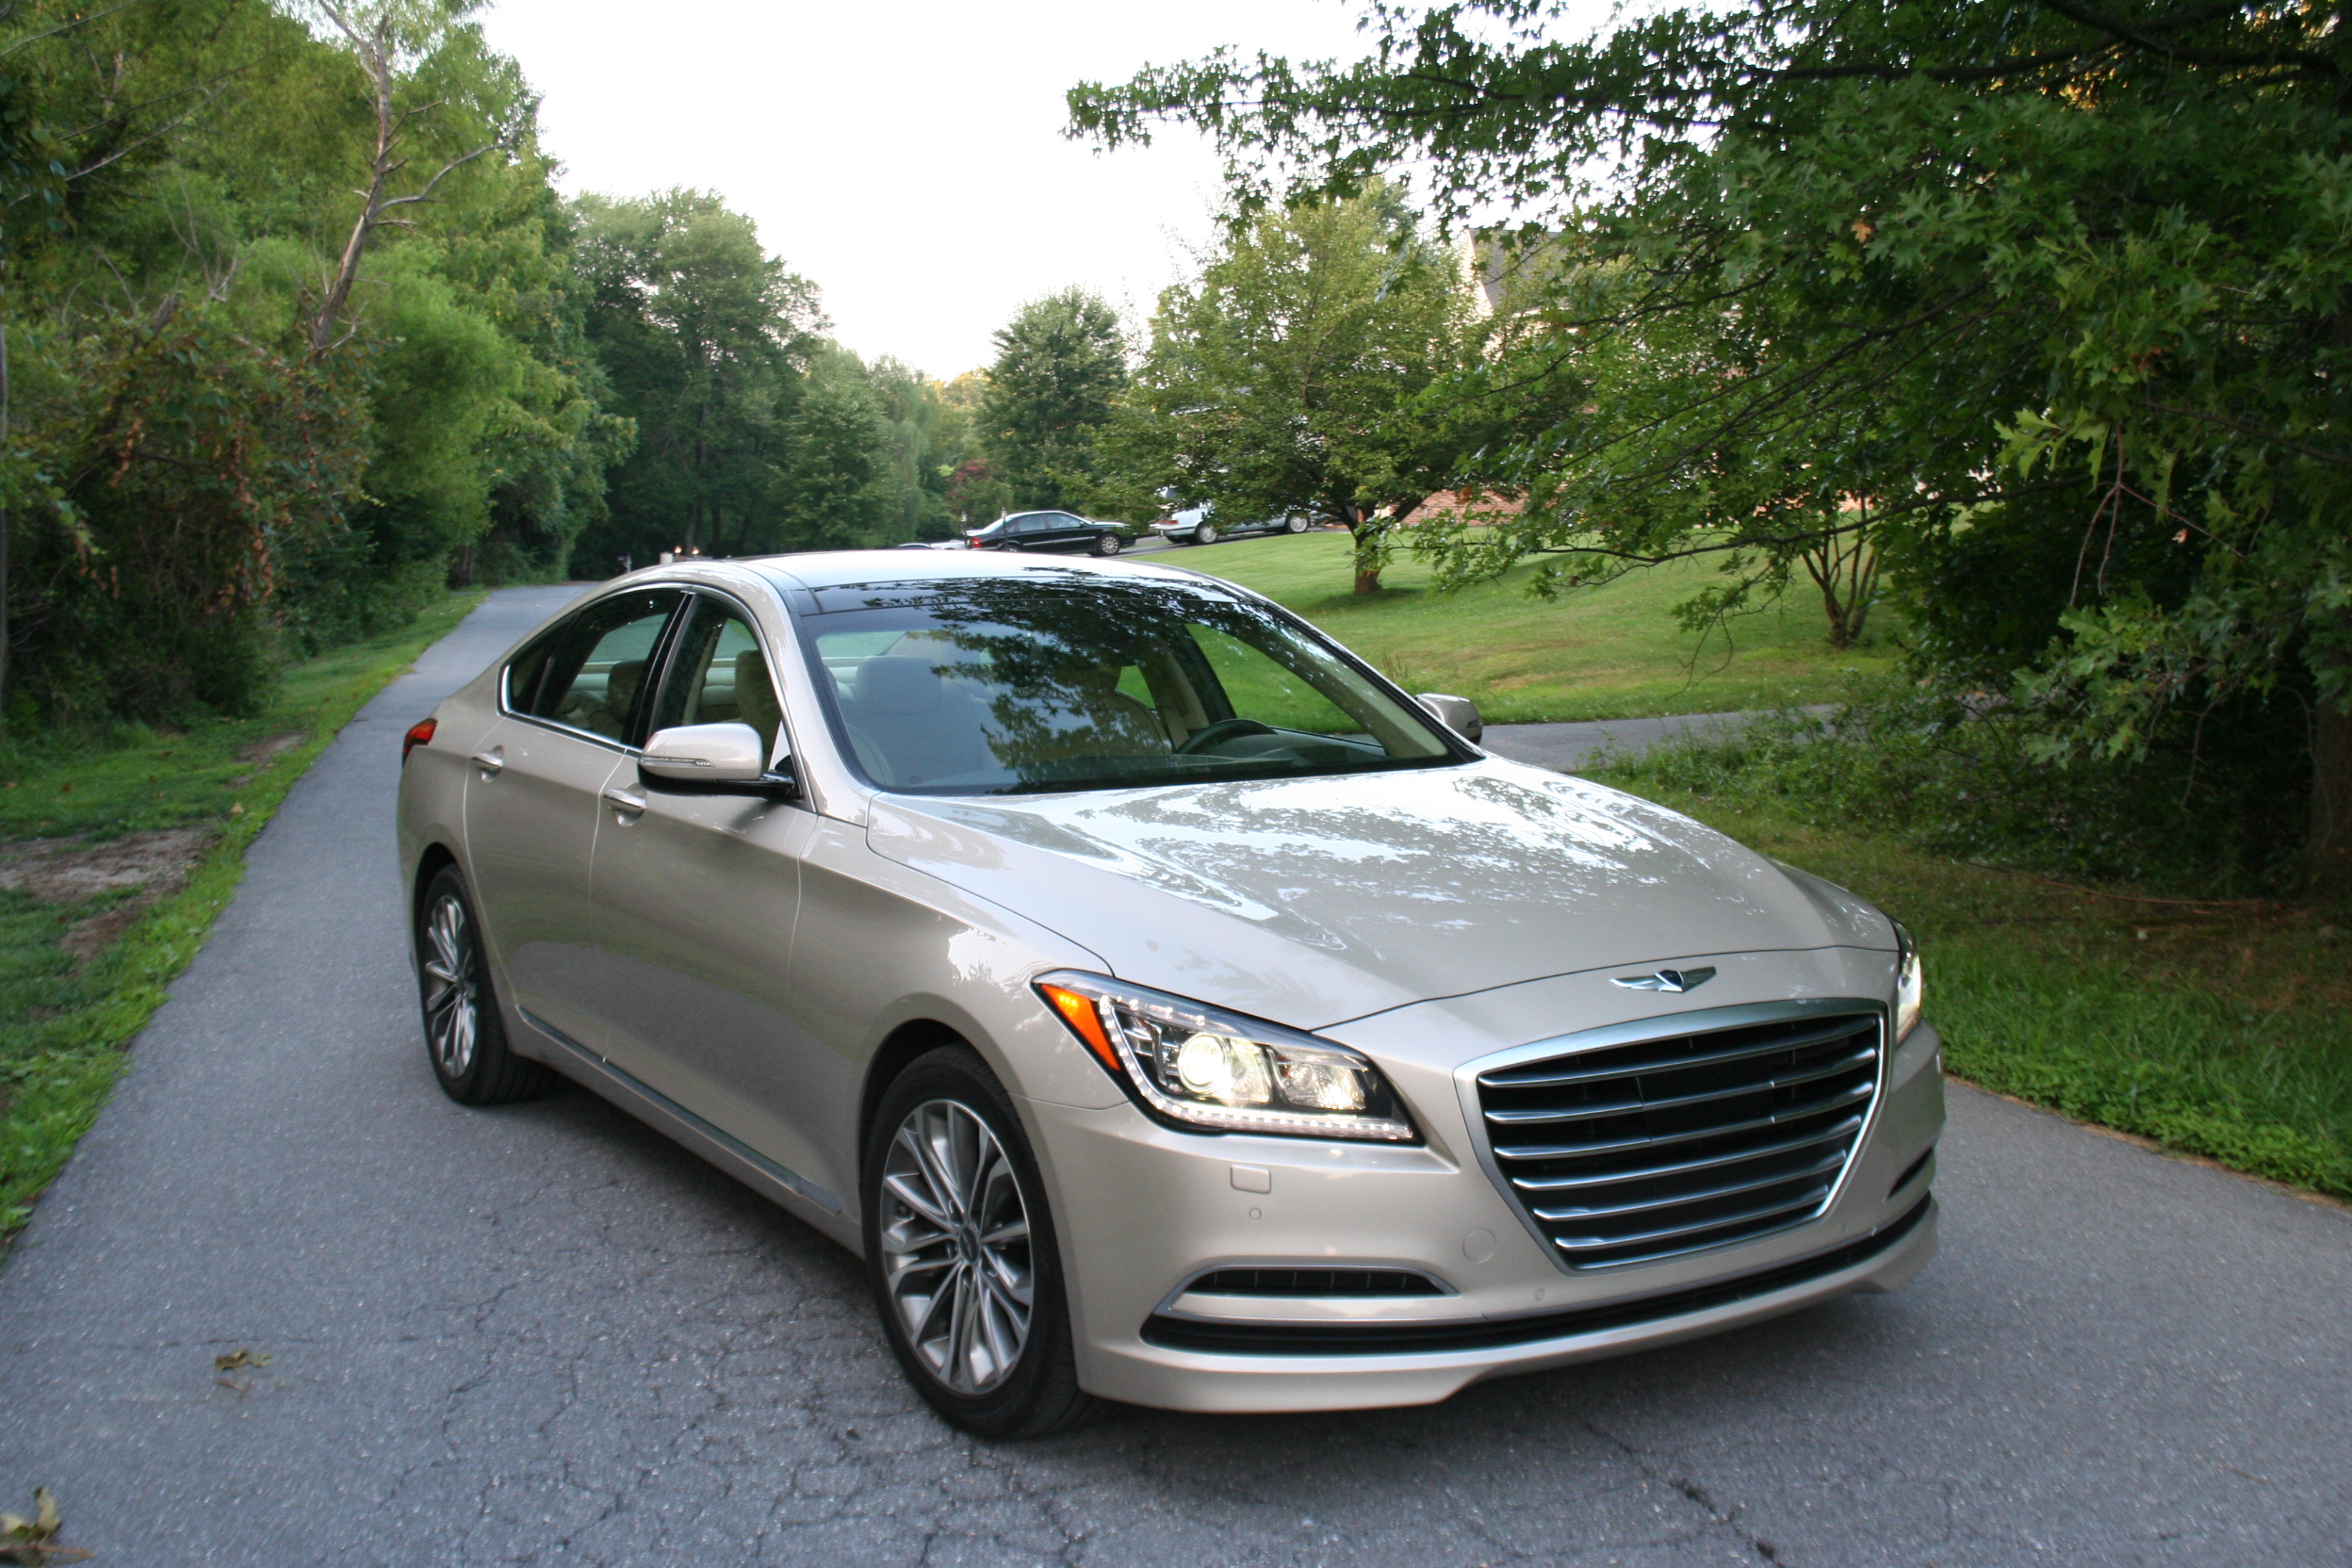 Car Report: 2015 Hyundai Genesis looks to make a mark